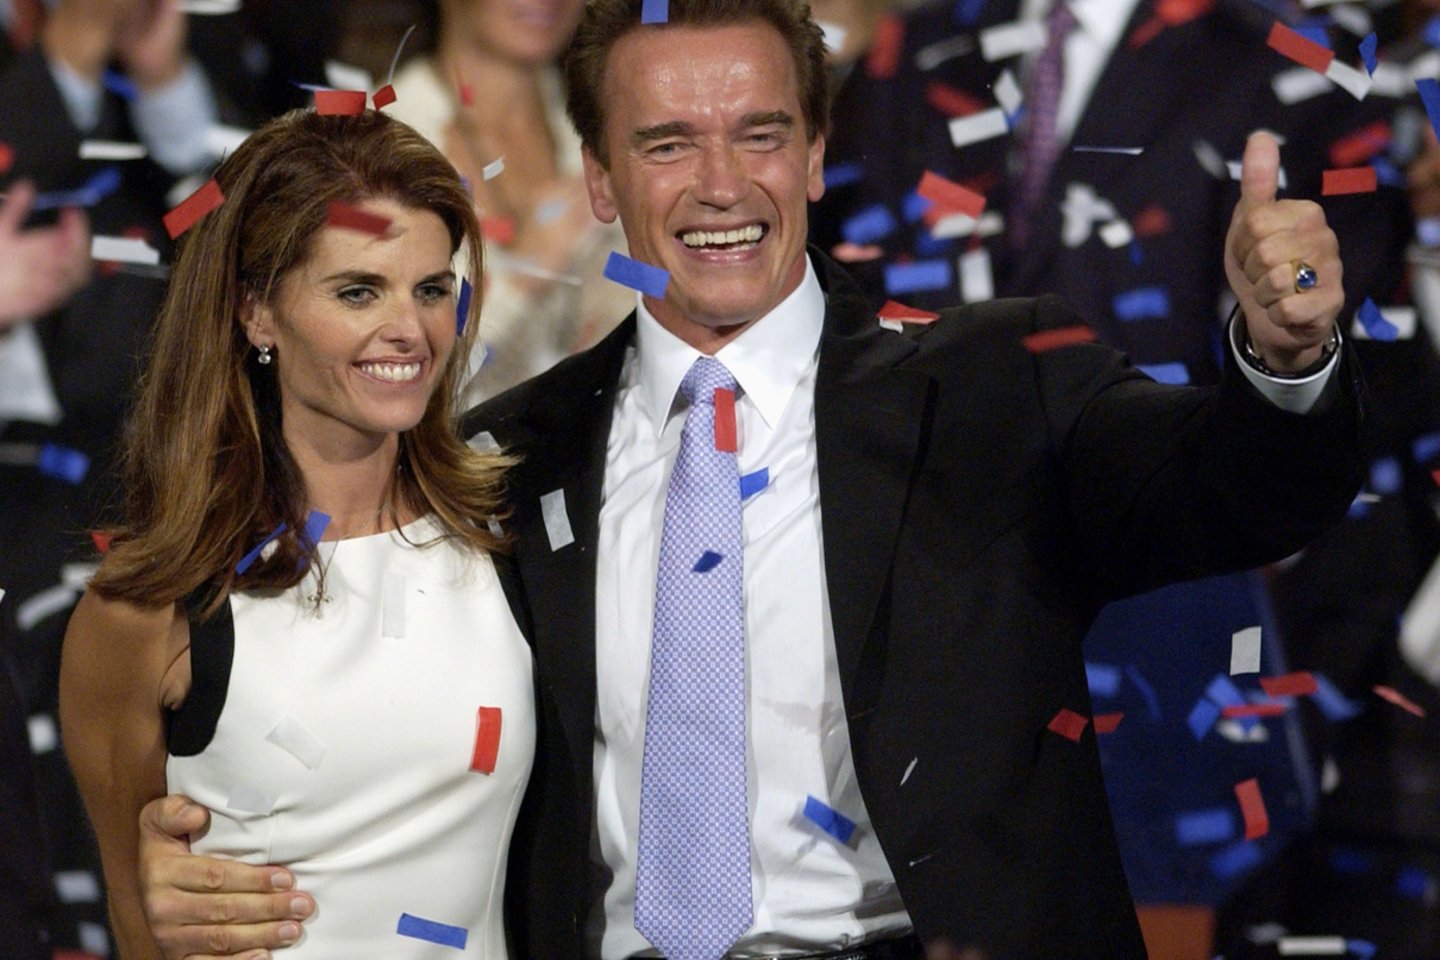  Po dešimtmečio trukusios skyrybų bylos Arnoldas Schwarzeneggeris išsiskyrė su Maria Schriver.<br> Scanpix nuotr.